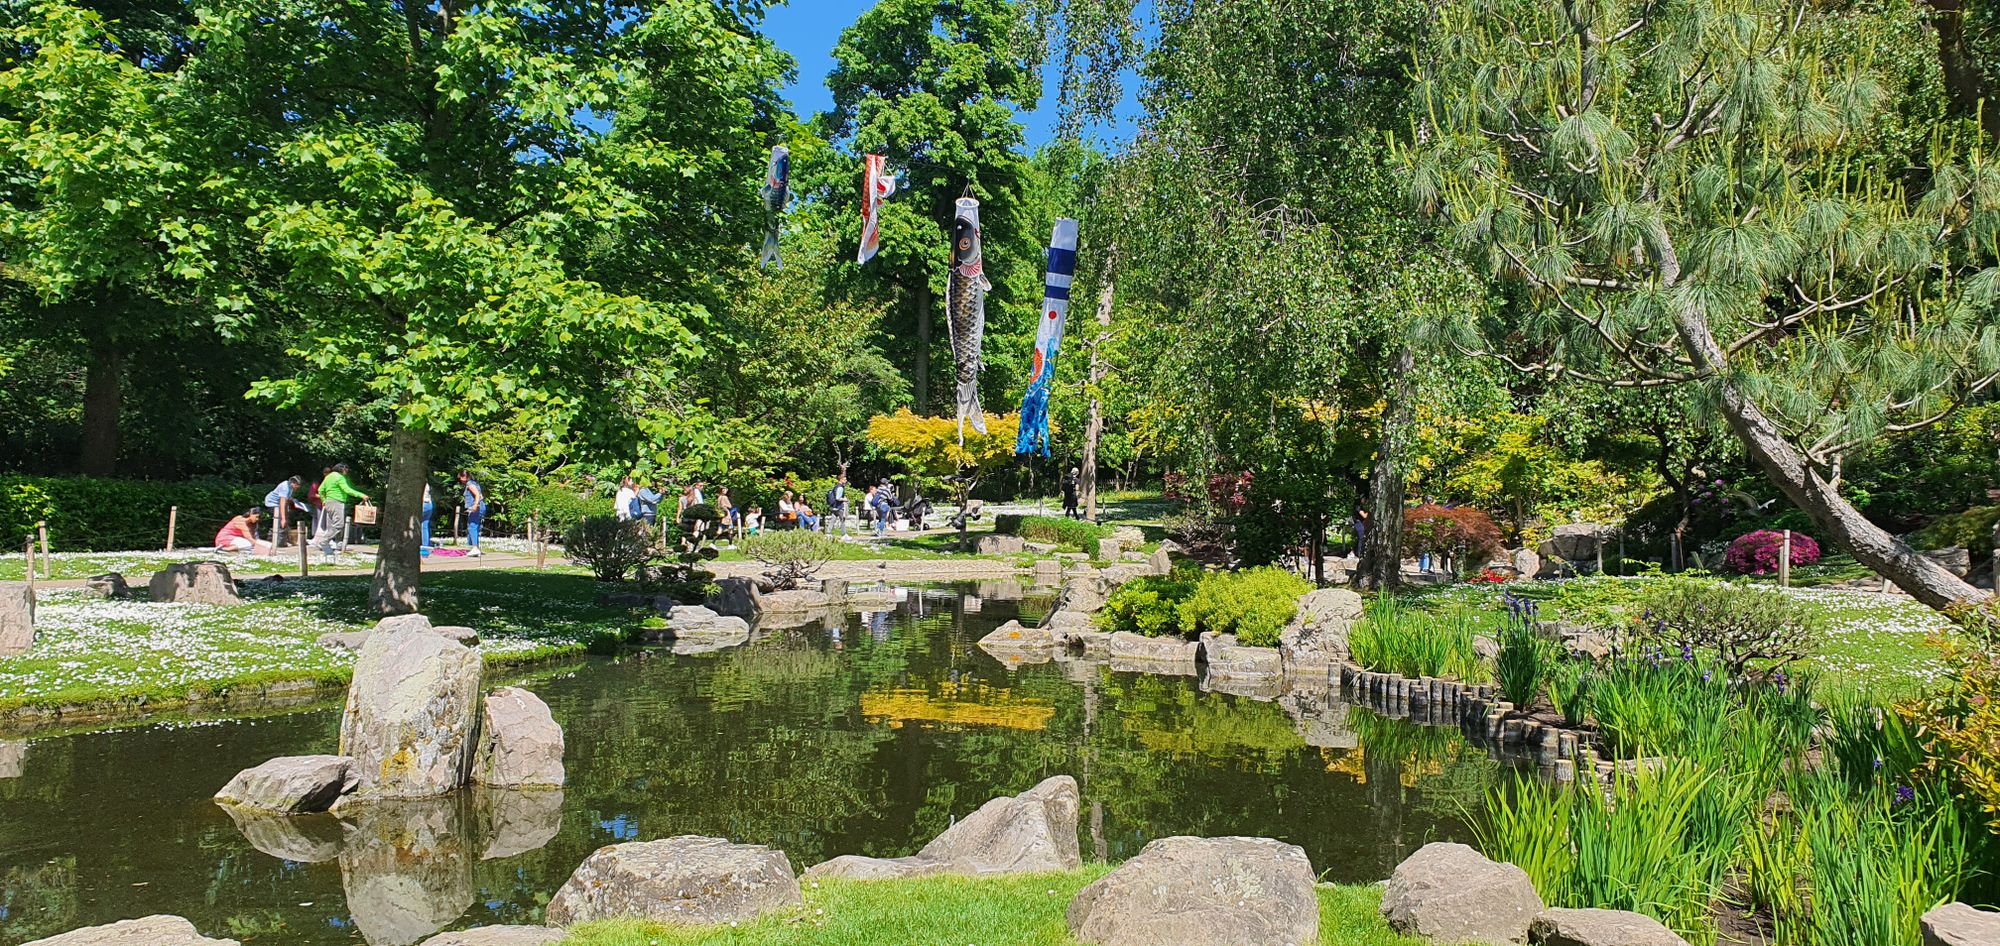 London Best Parks #1: Kyoto Garden, Holland Park